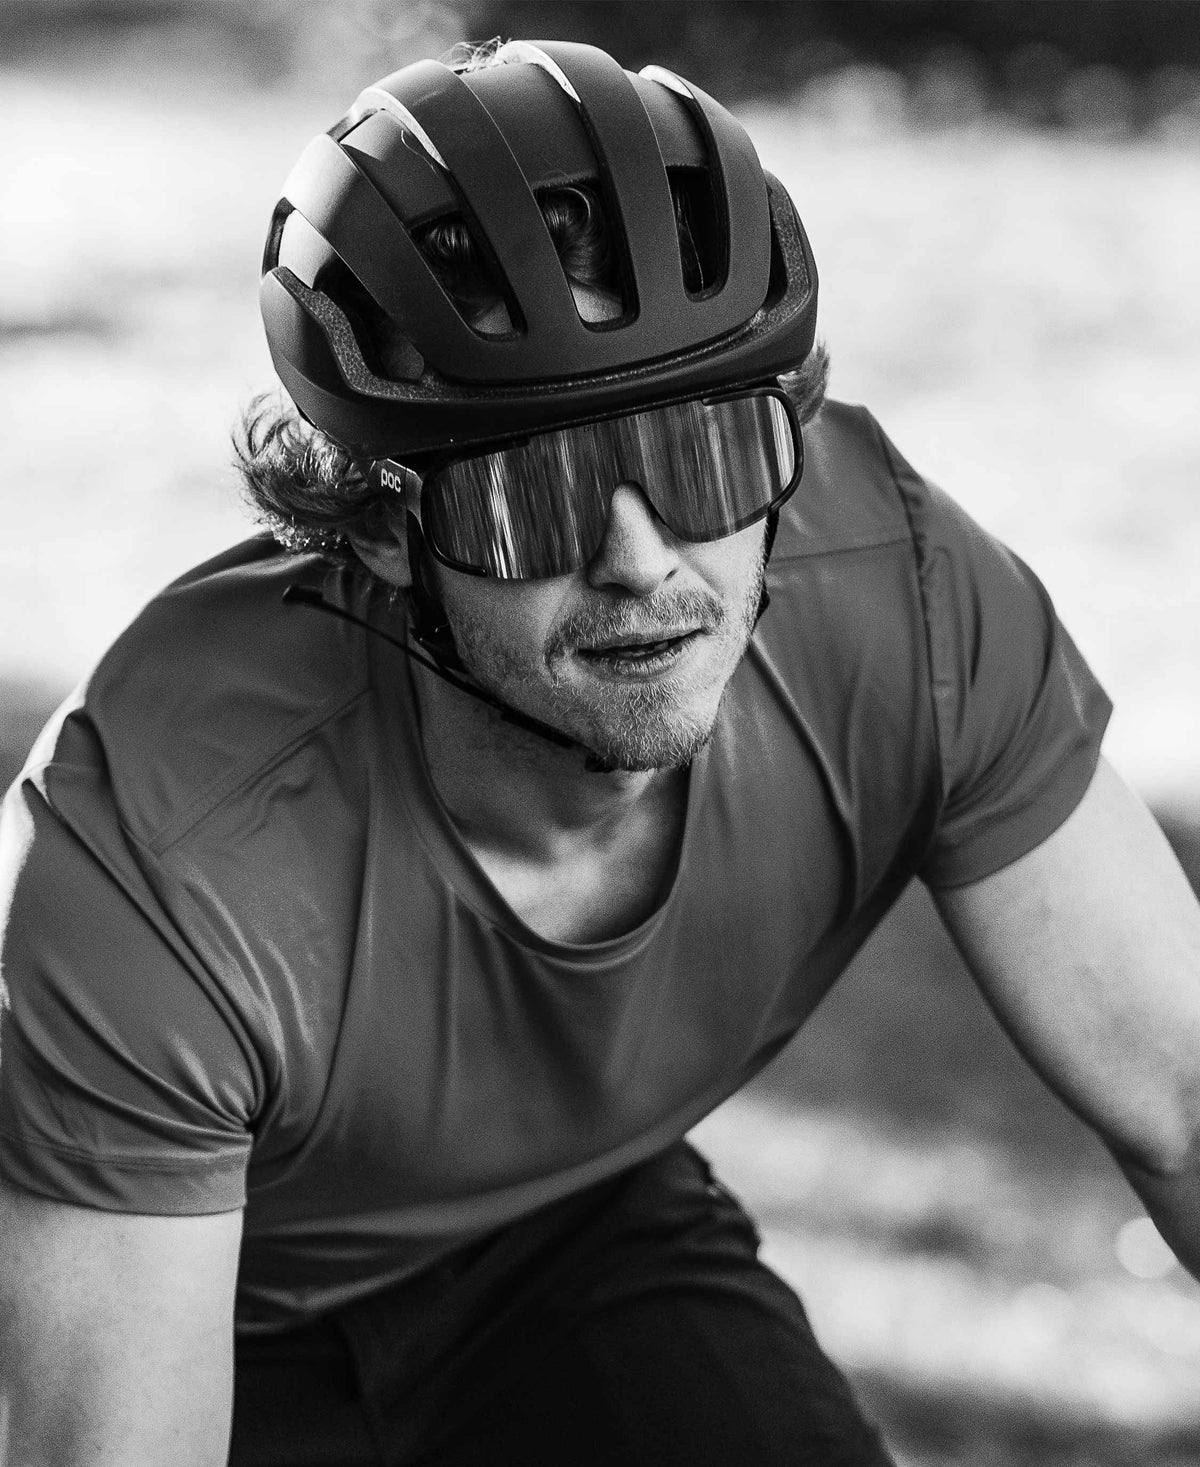 Helmet Safety Standards for Road Biking